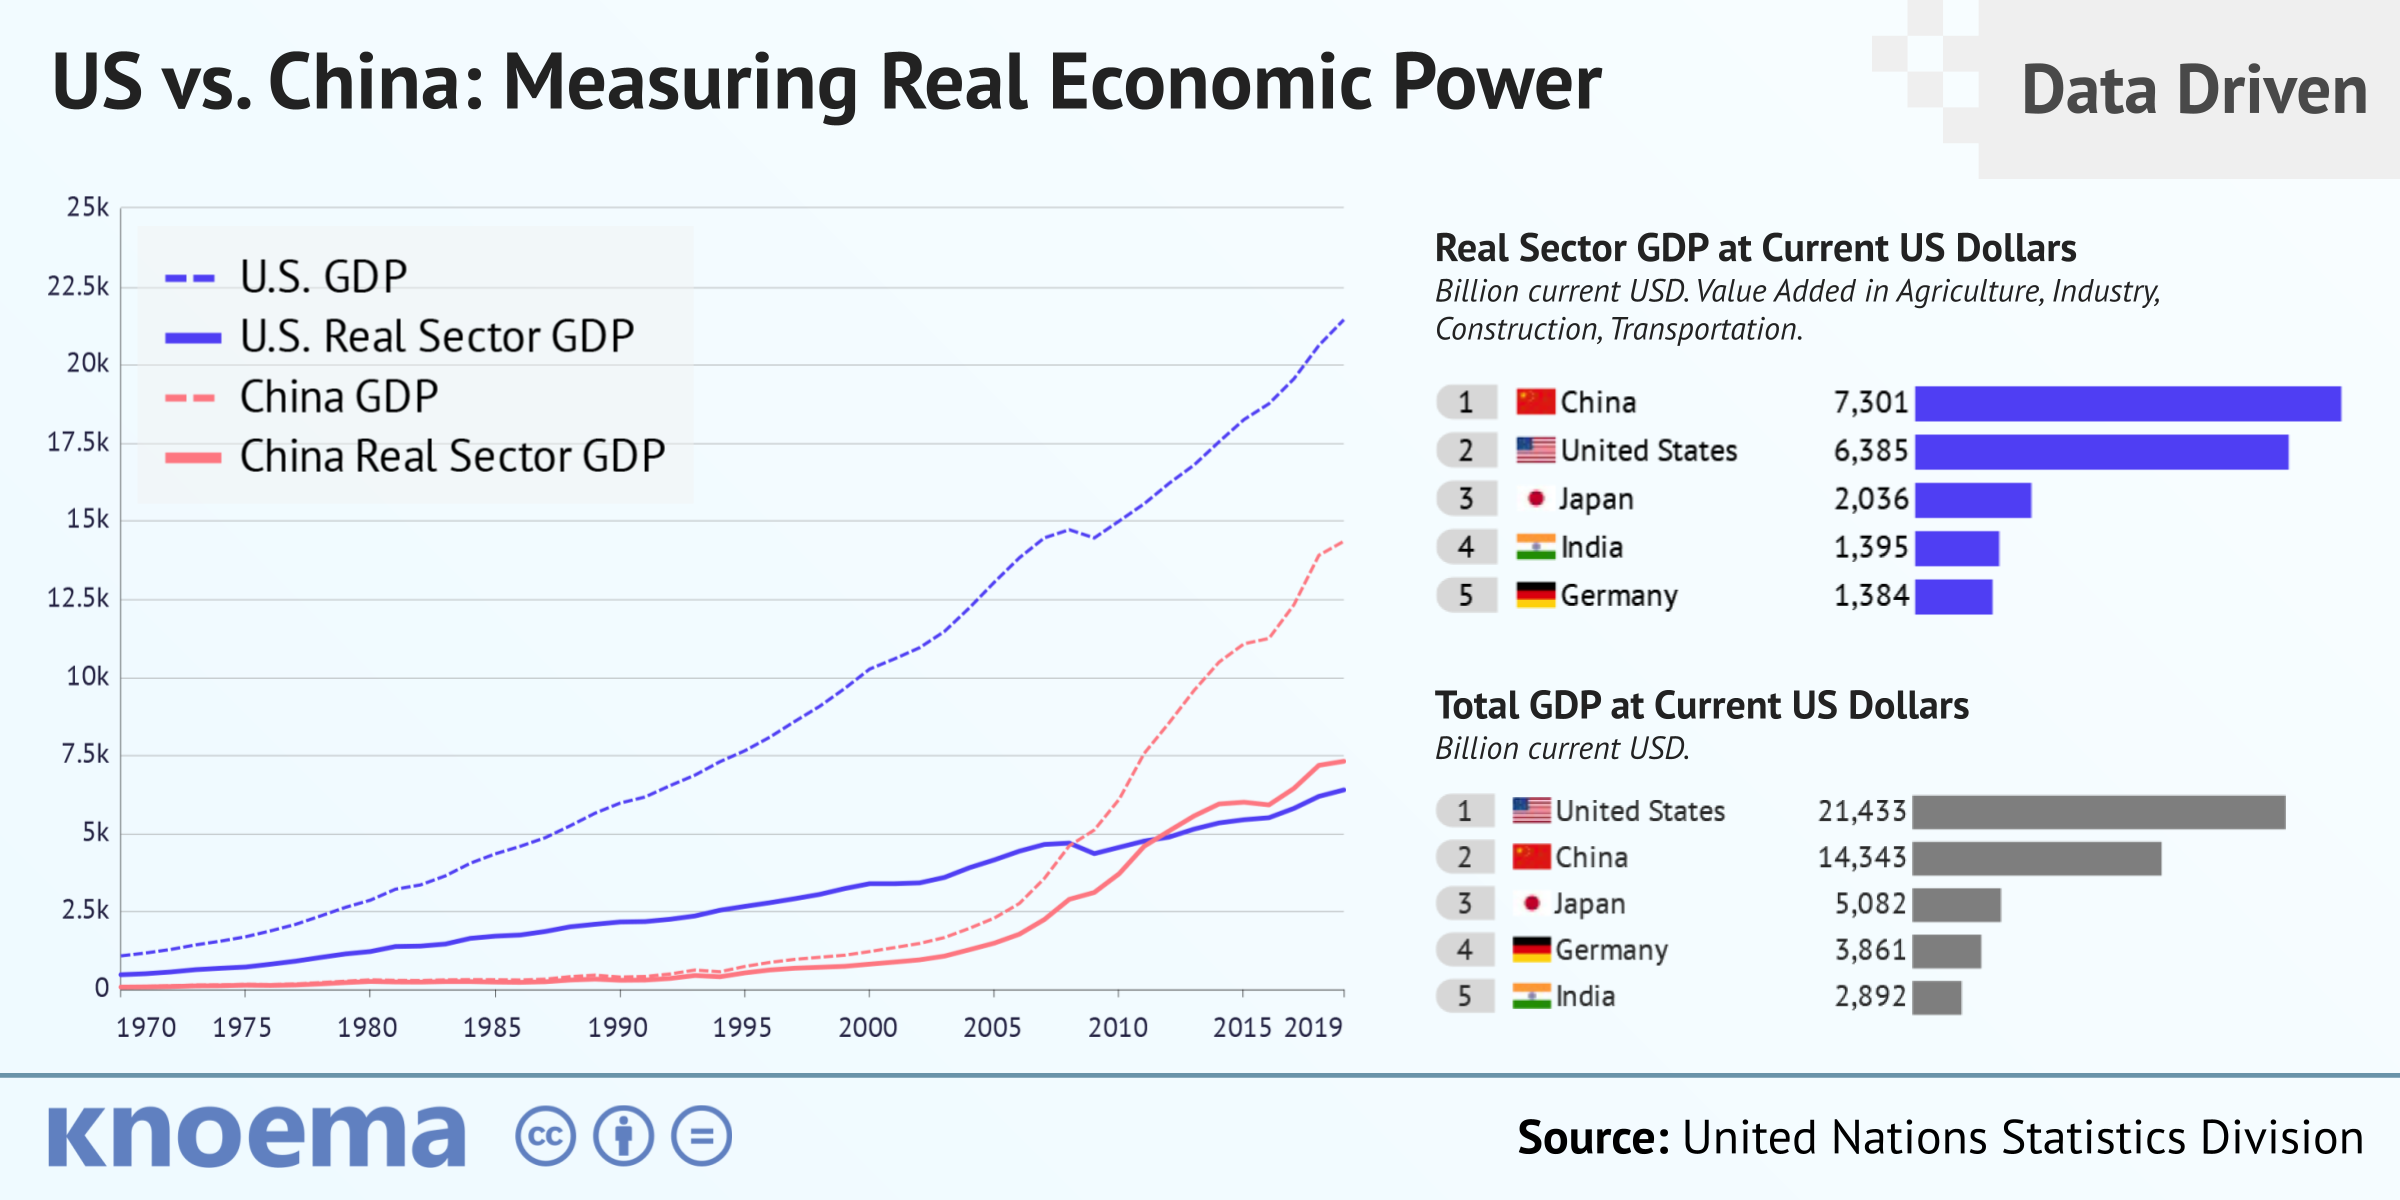 US vs. China Measuring Real Economic Power